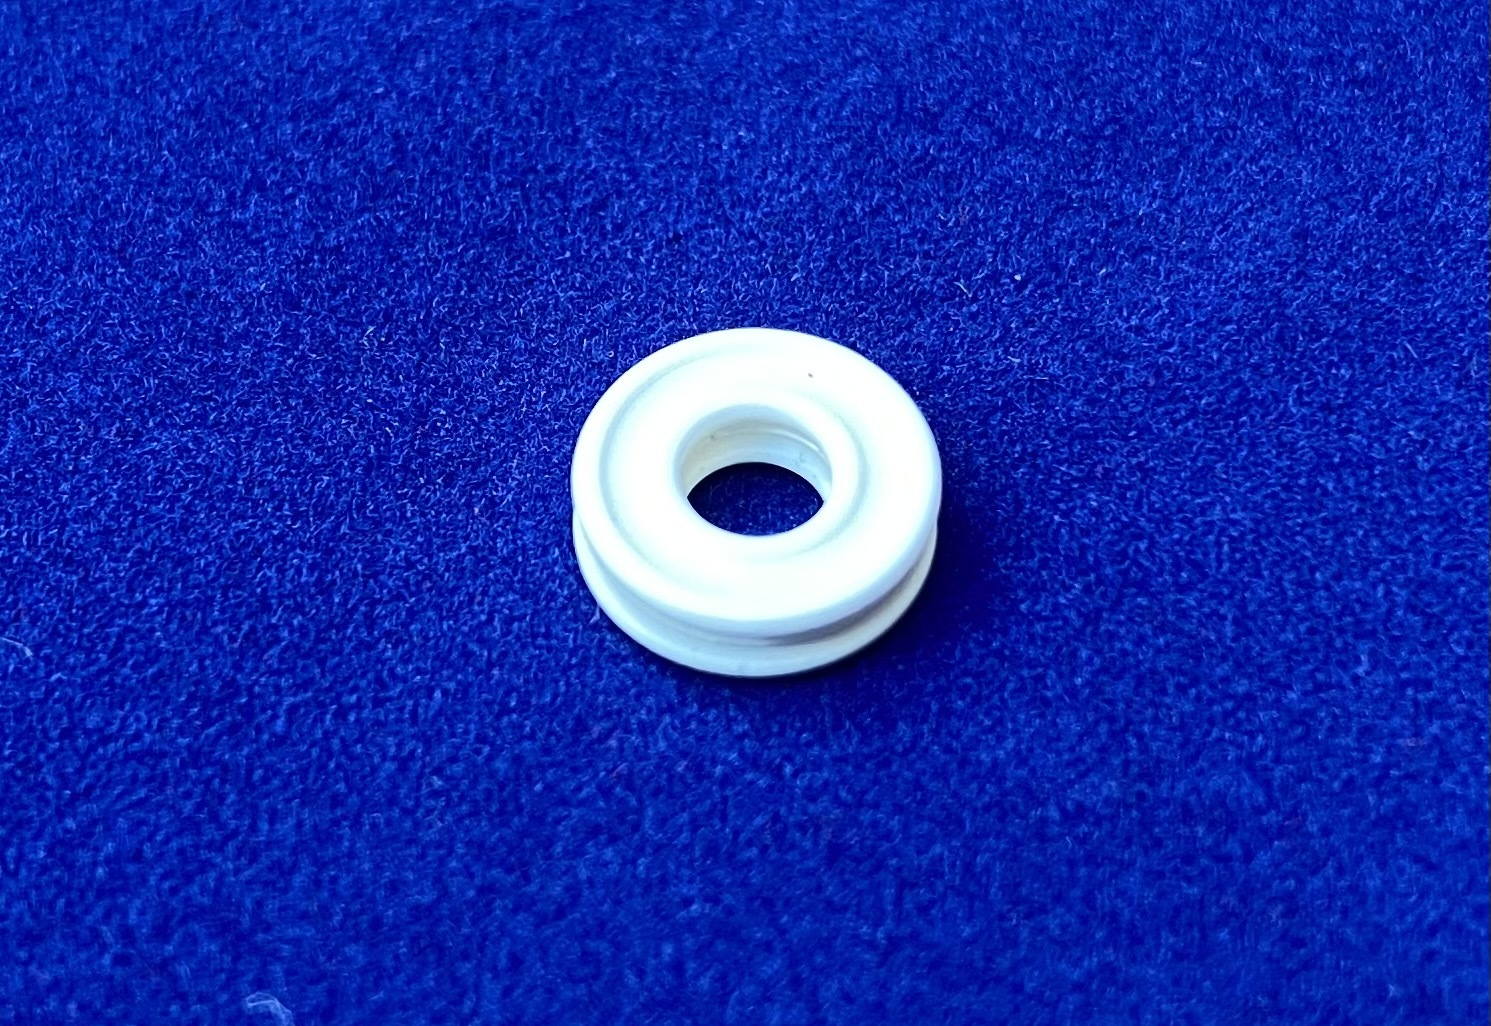 white-q-ring